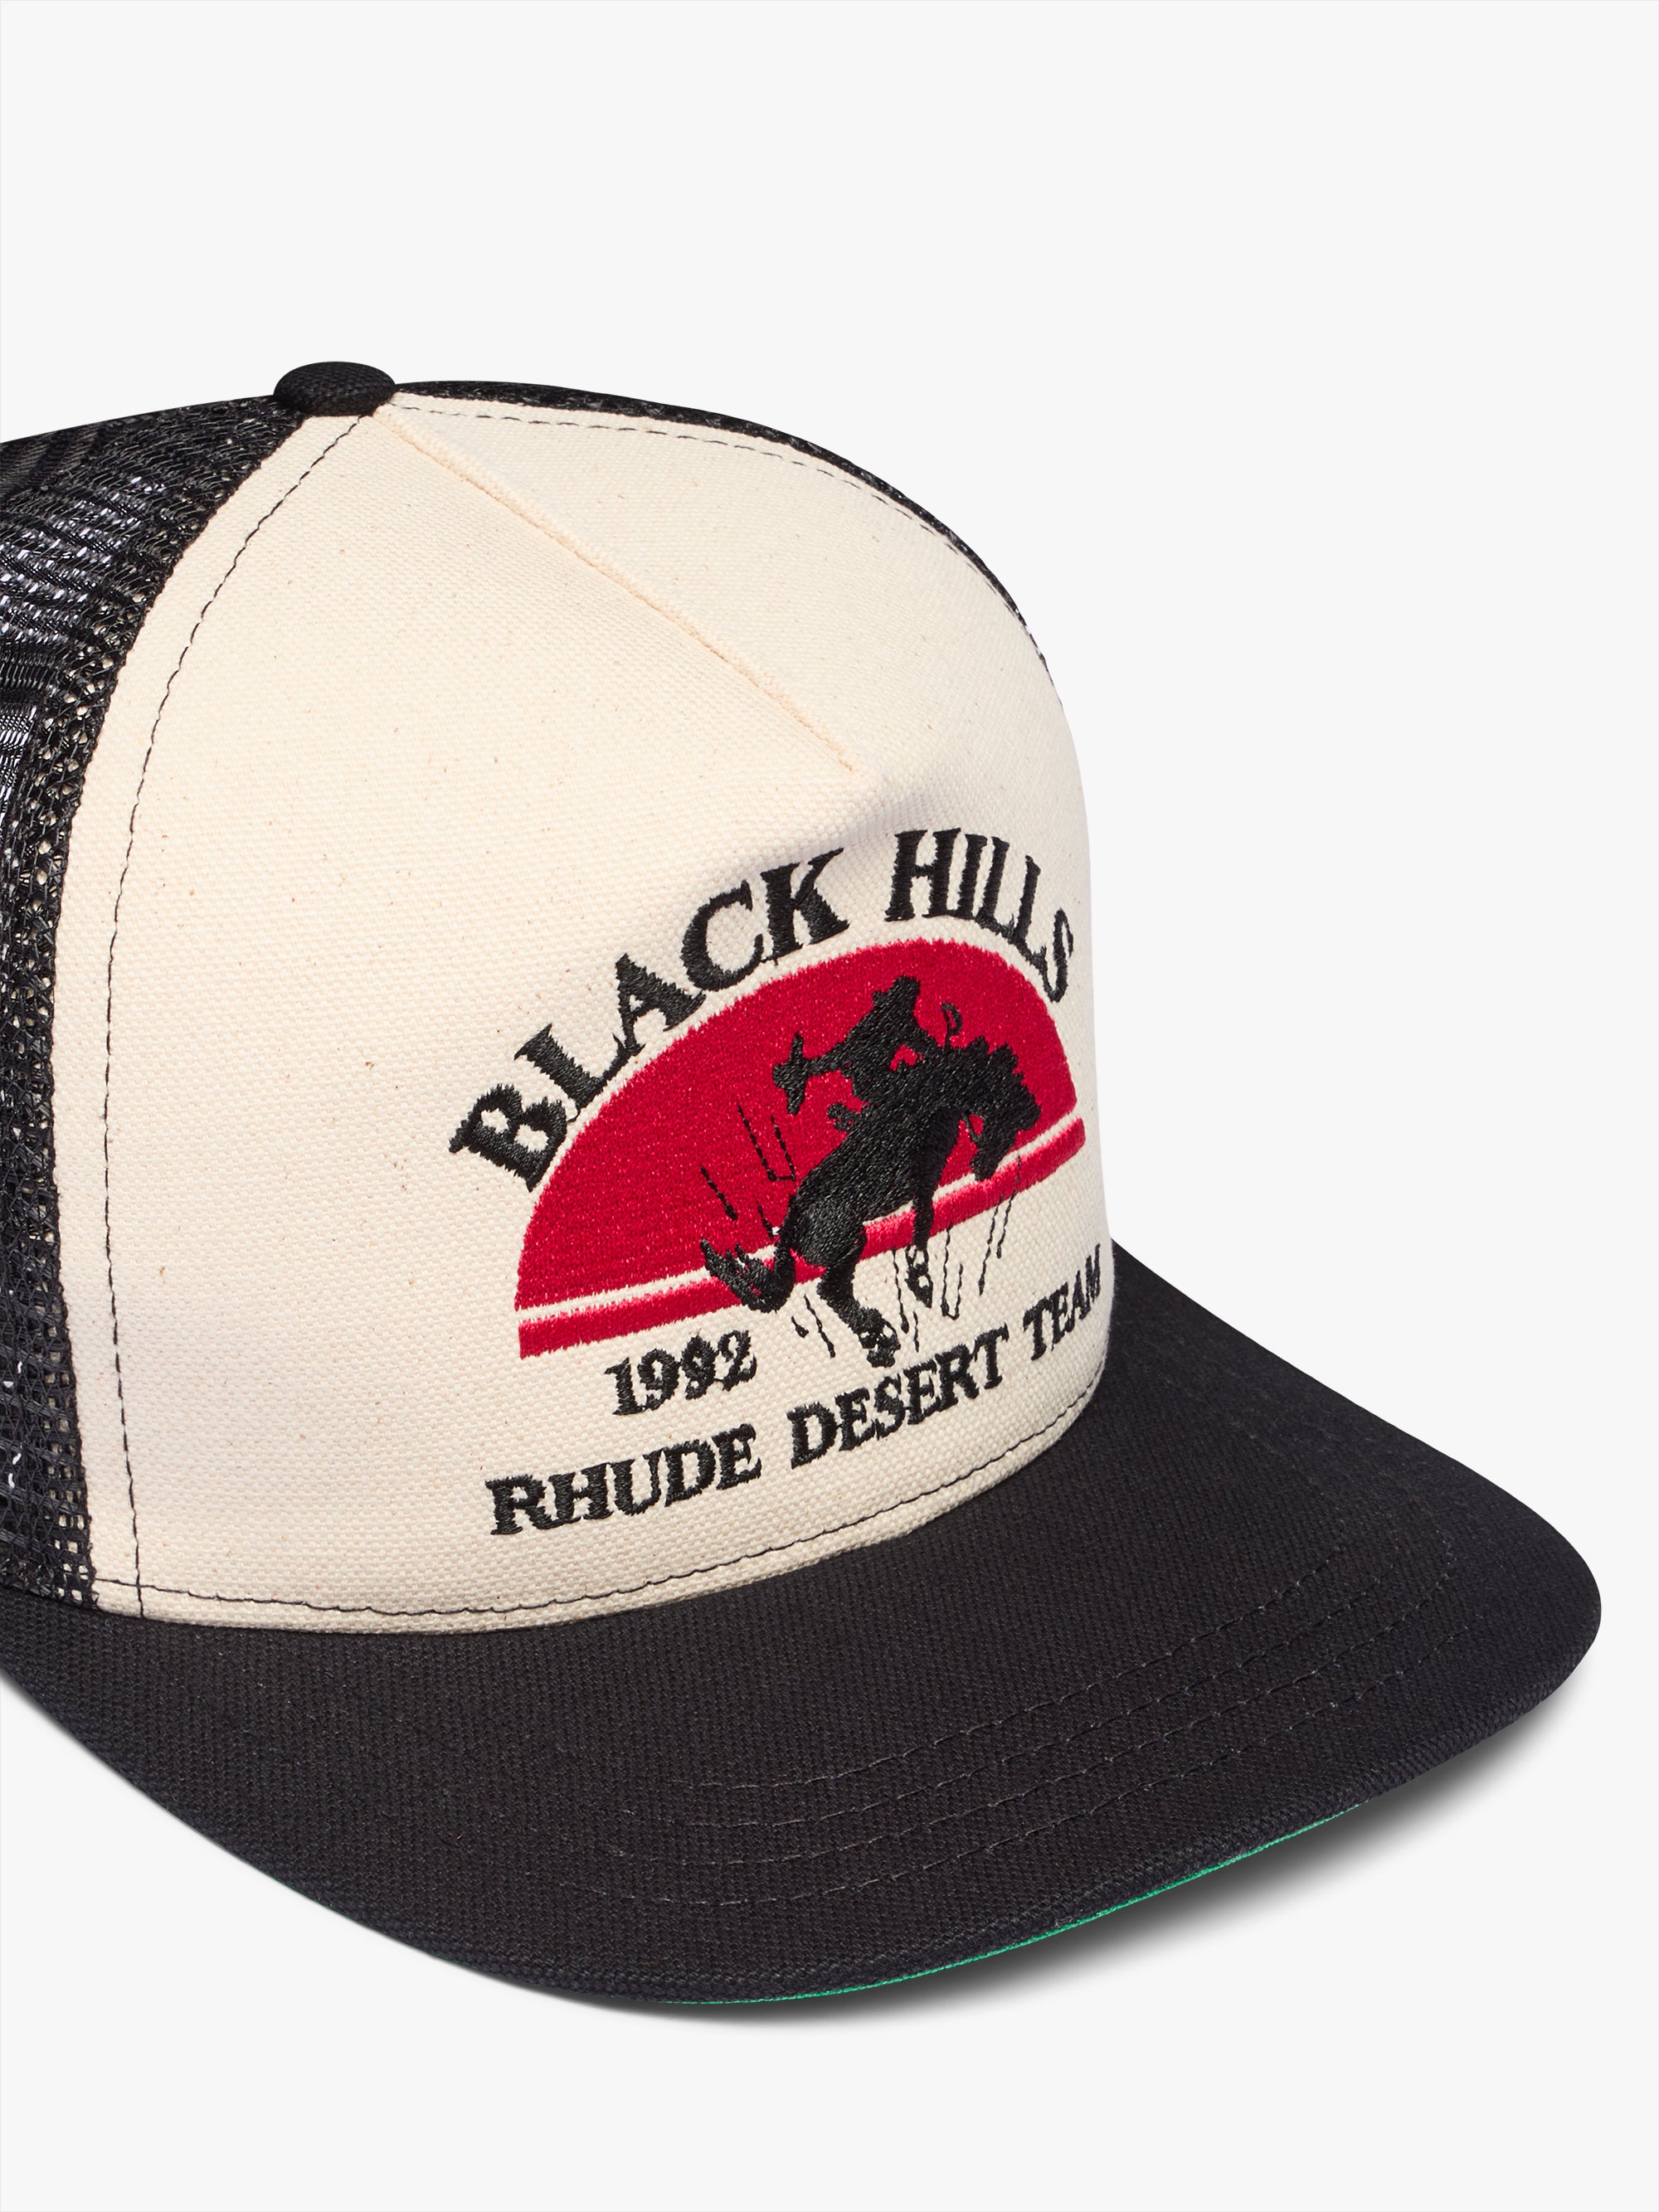 BLACK HILLS CANVAS TRUCKER HAT – R H U D E